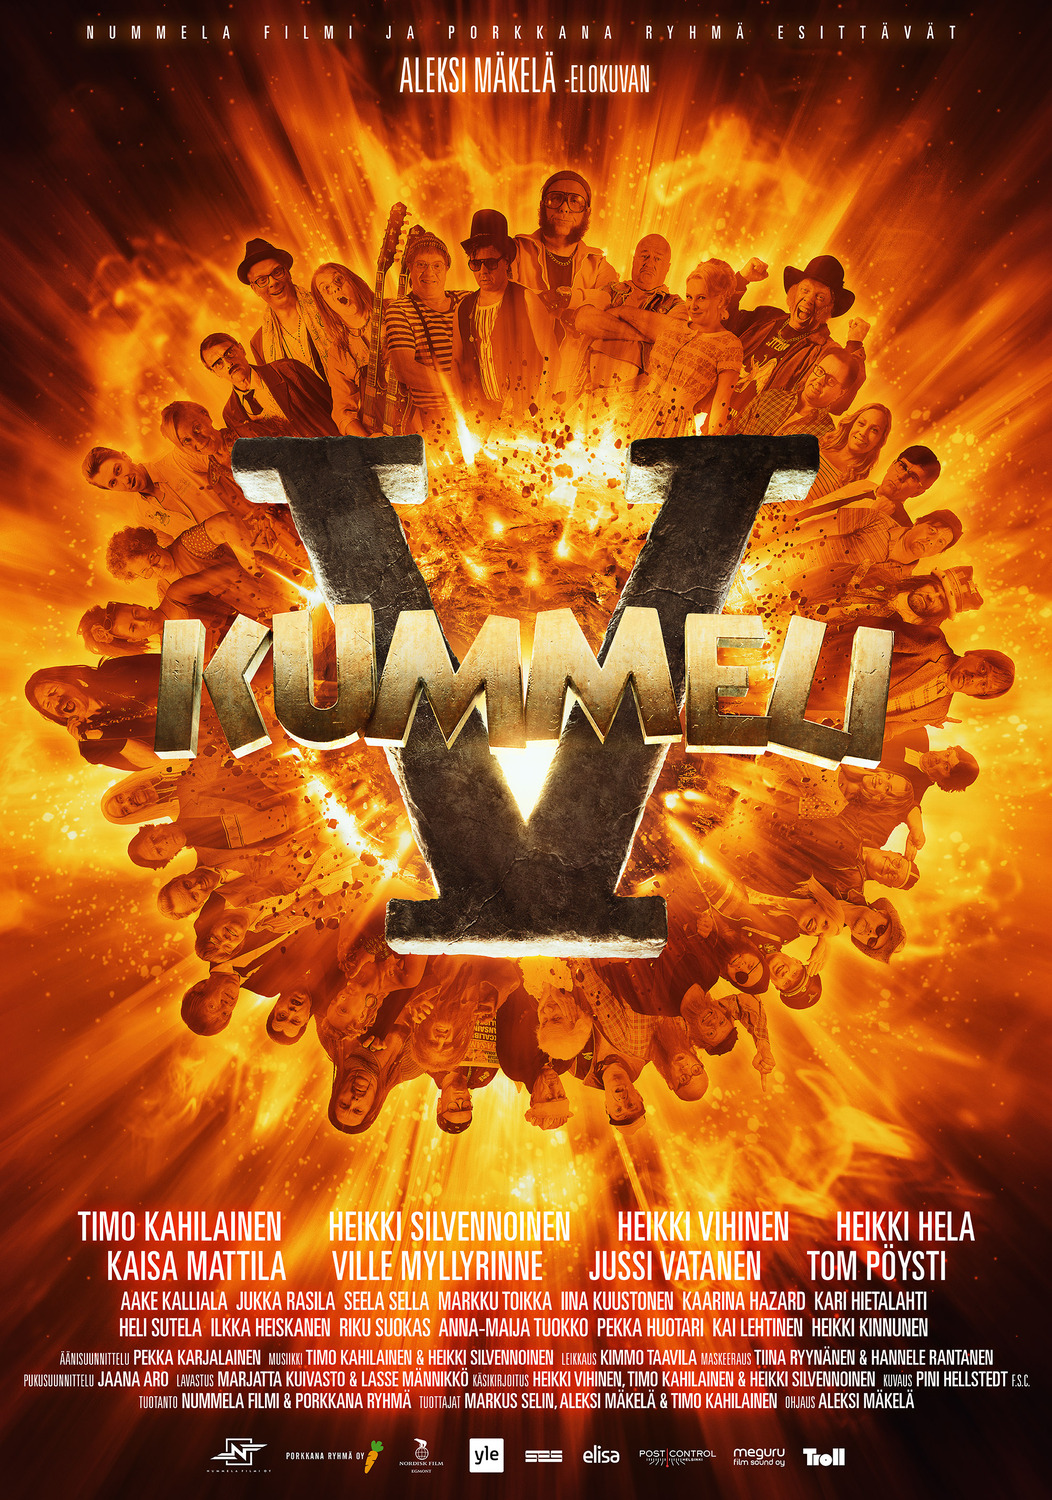 Extra Large Movie Poster Image for Kummeli V 